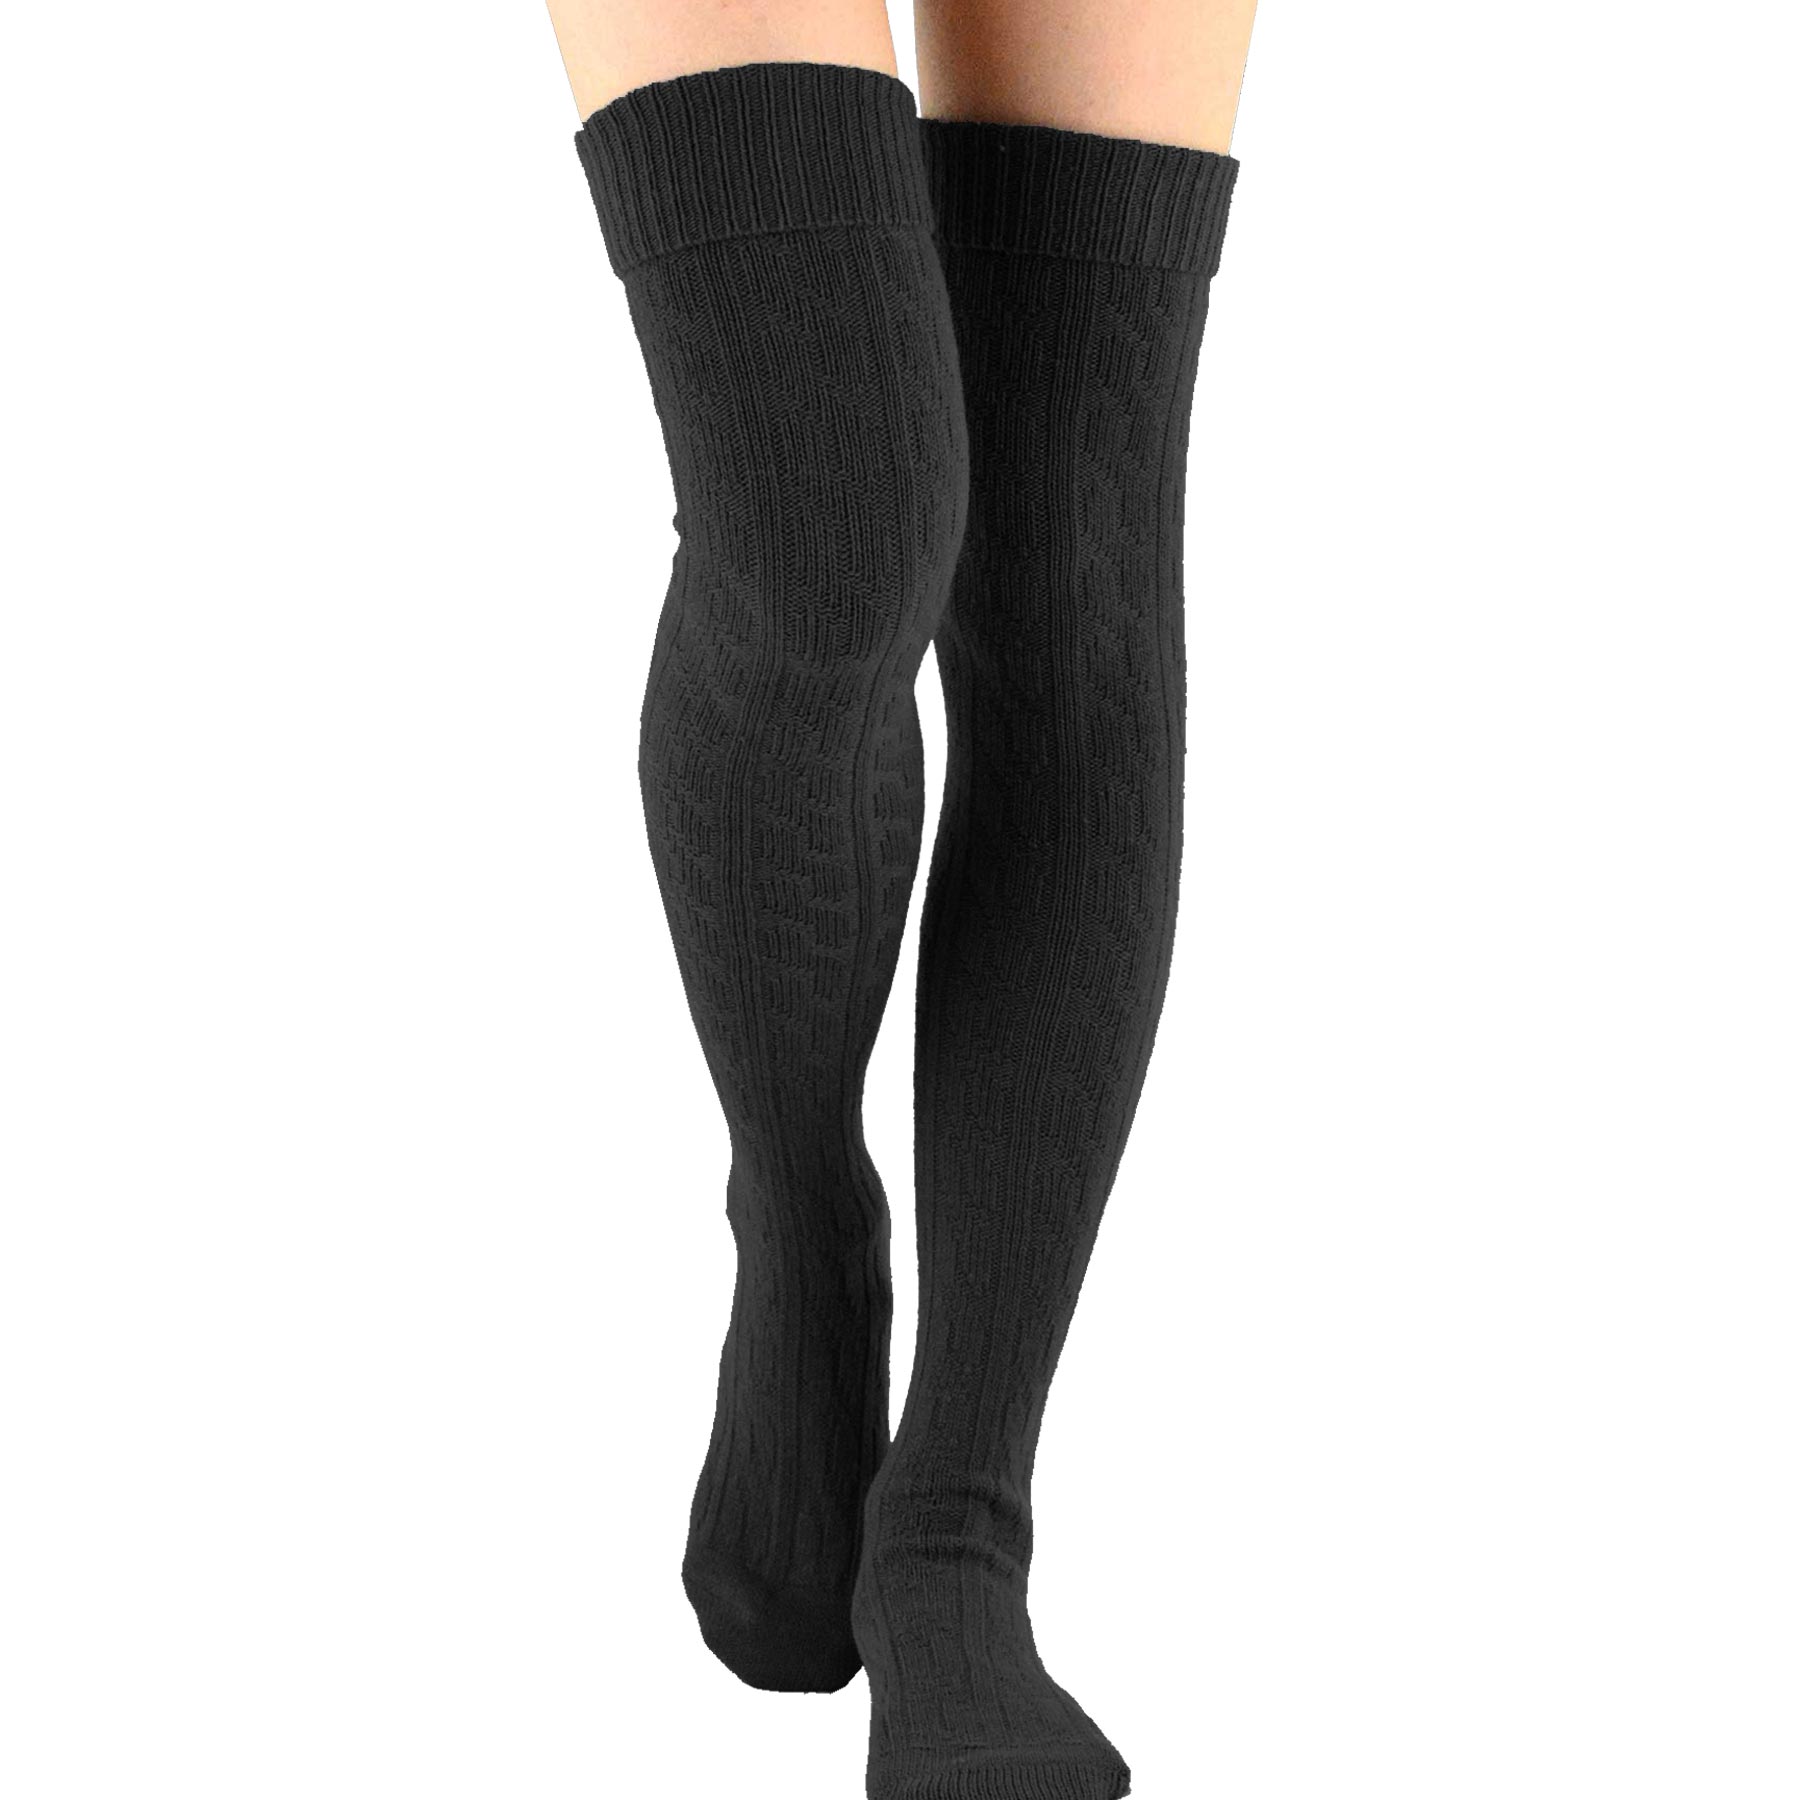 Teehee Womens Fashion Over The Knee High Socks 3 Pair Combo Cable Cuff Dark Combo 